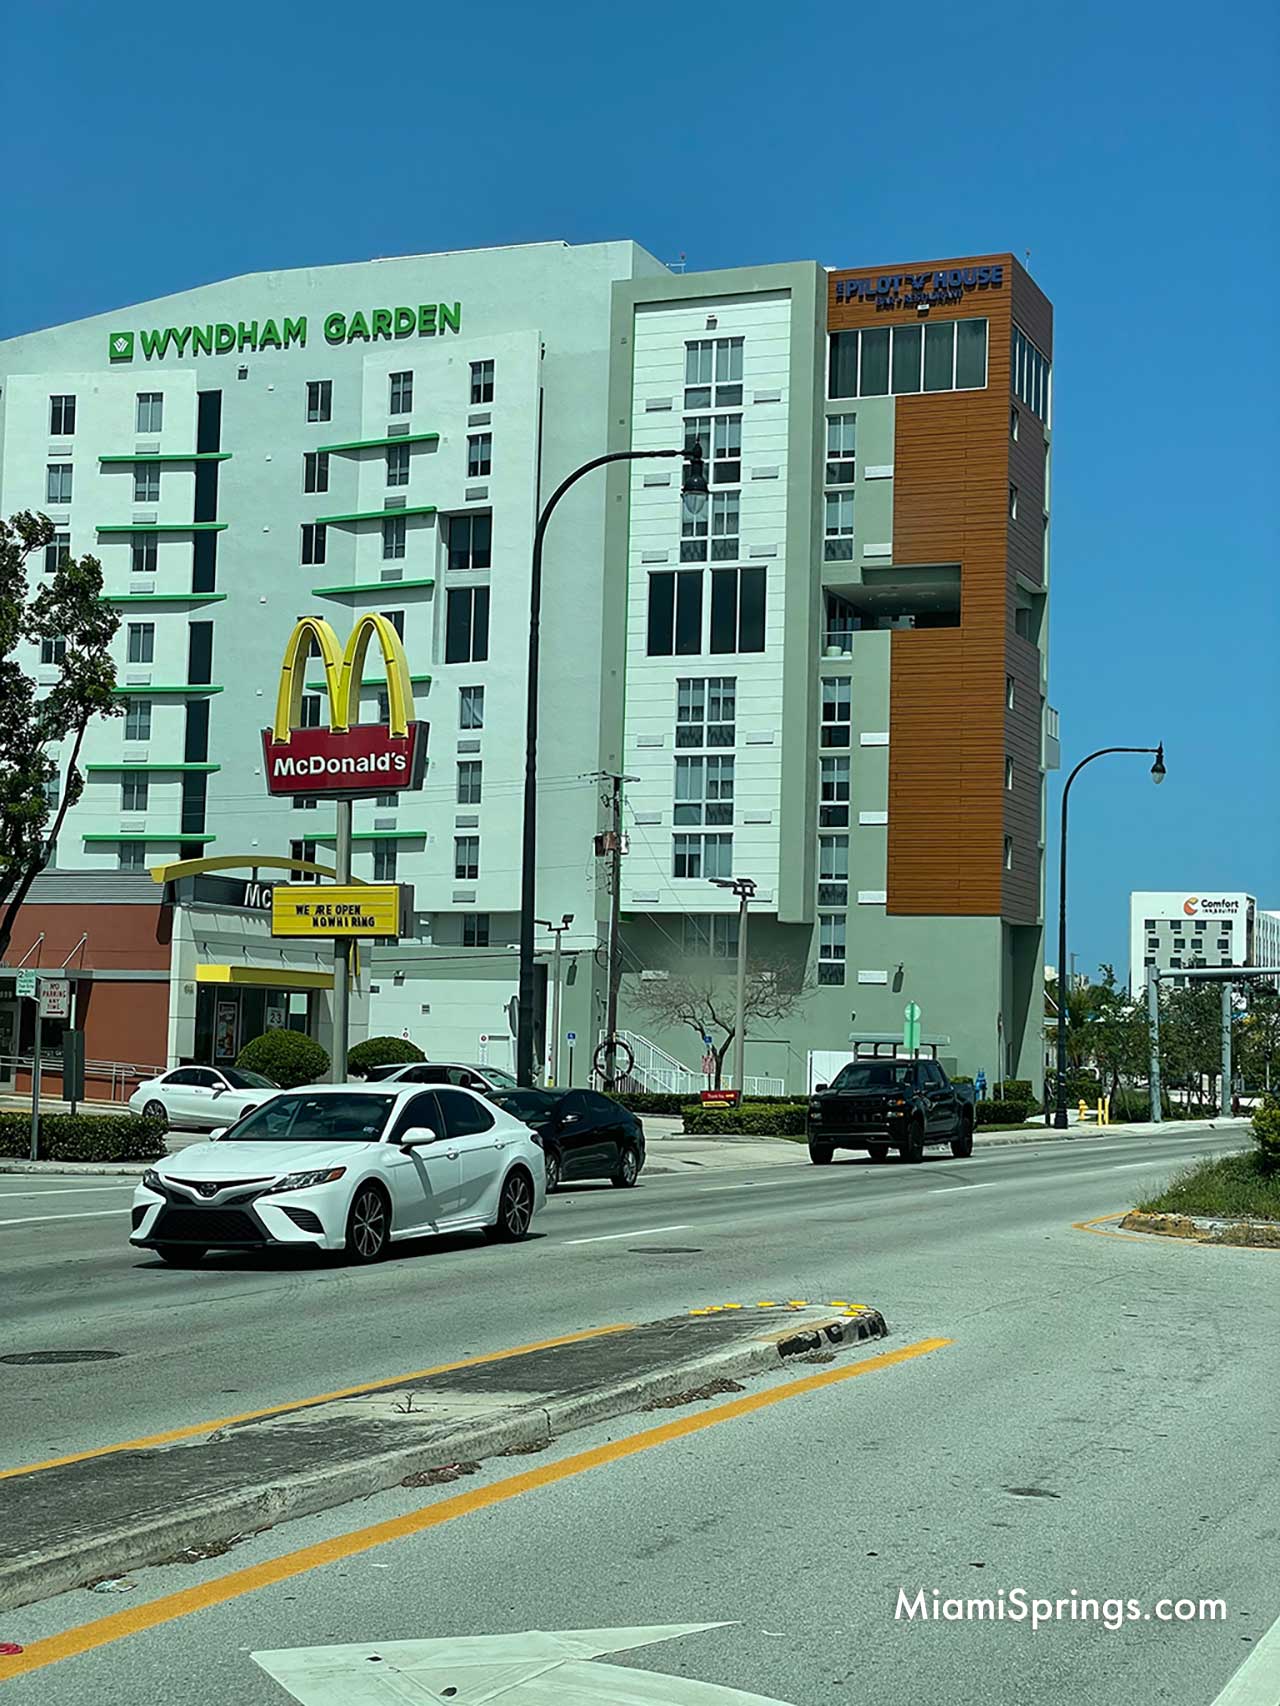 Wyndham Garden Hotel on 36th Street in Miami Springs